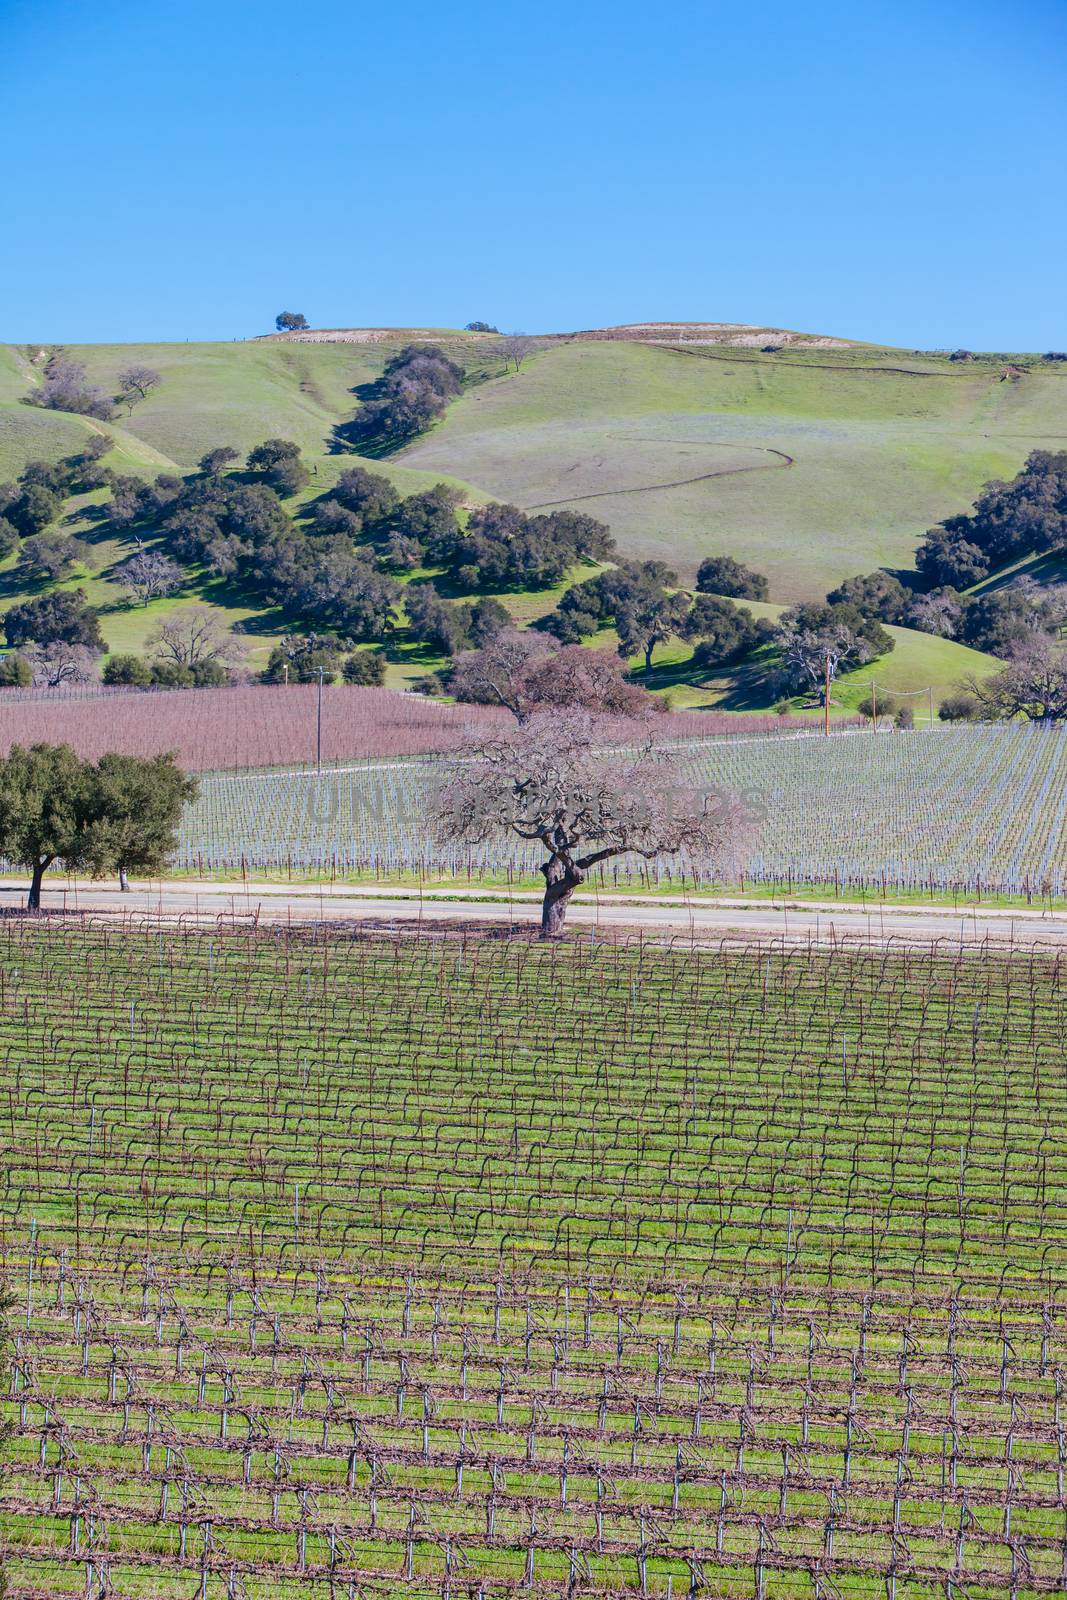 Winter vines in Santa Ynez Valley wine region at Firestone Winery in Los Olivos, California, USA